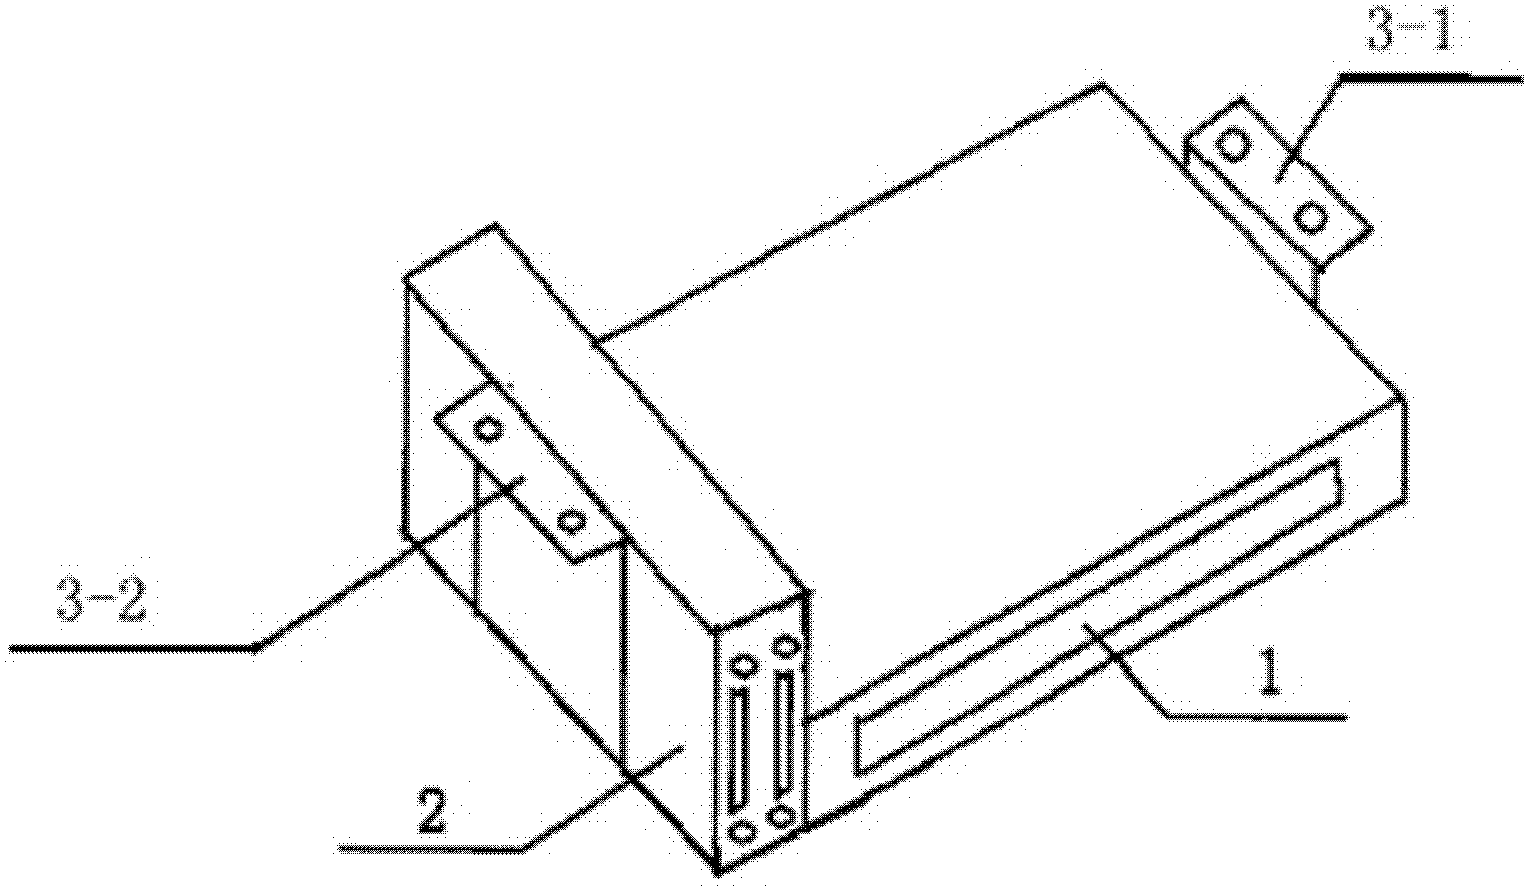 Hard disk shock absorber of on-board computer system